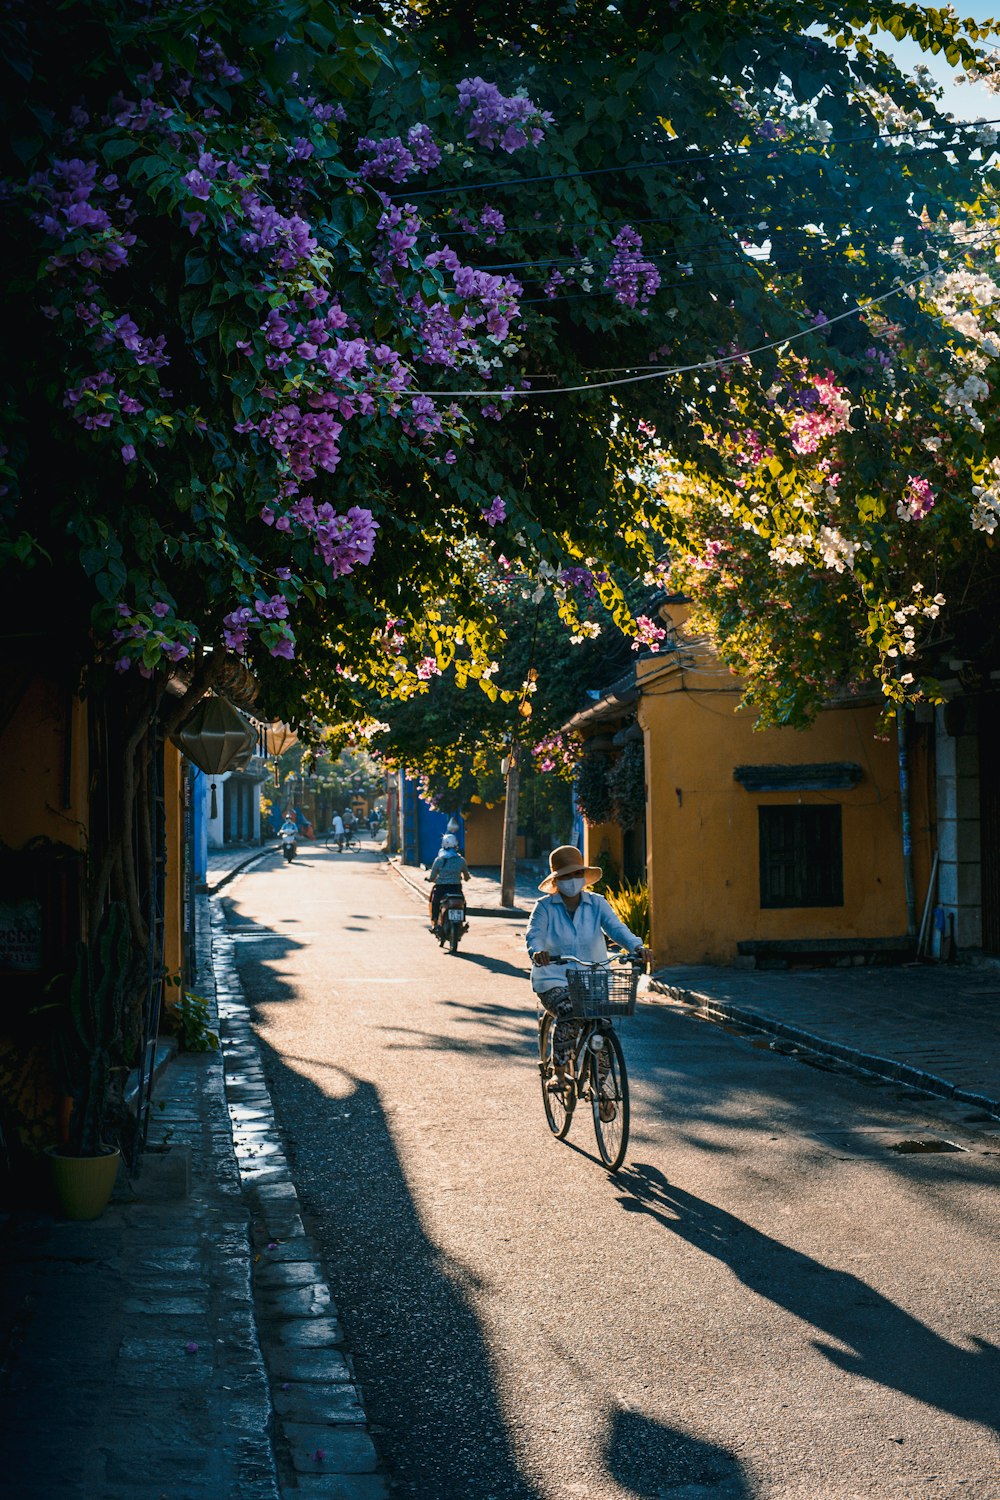 a man riding a bike down a street next to trees